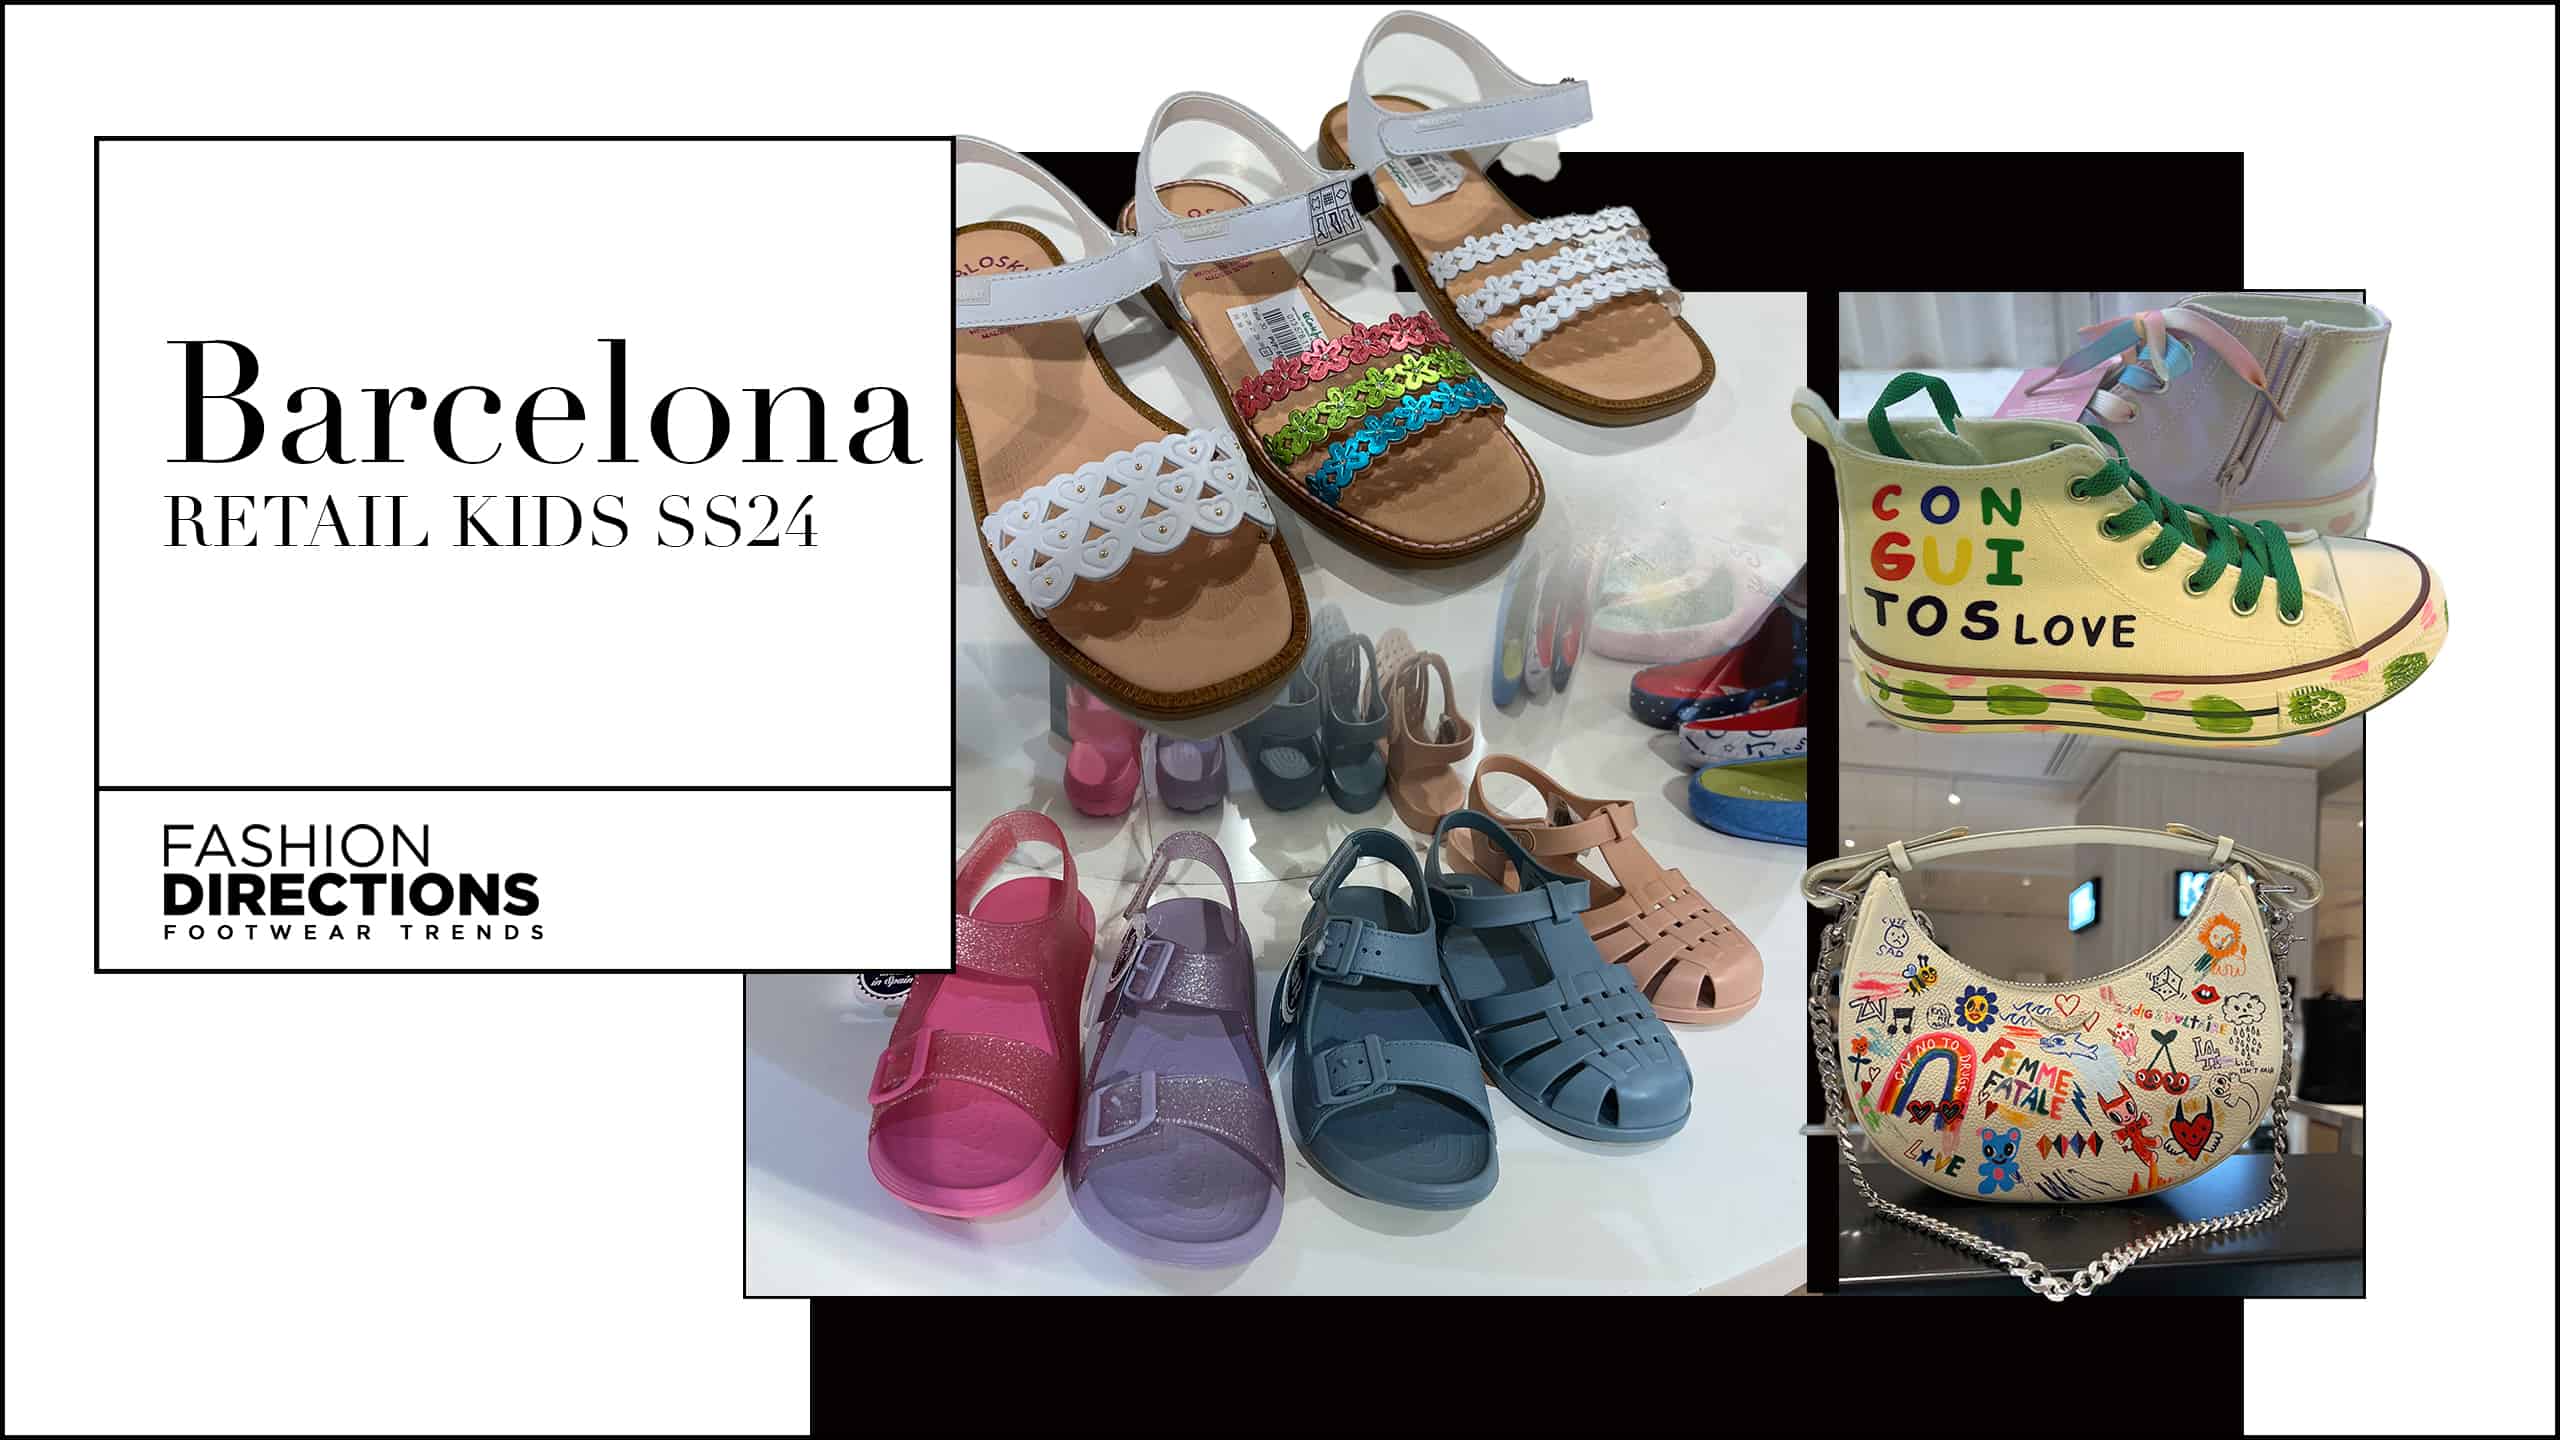 Barcelona Retail Kids ss24